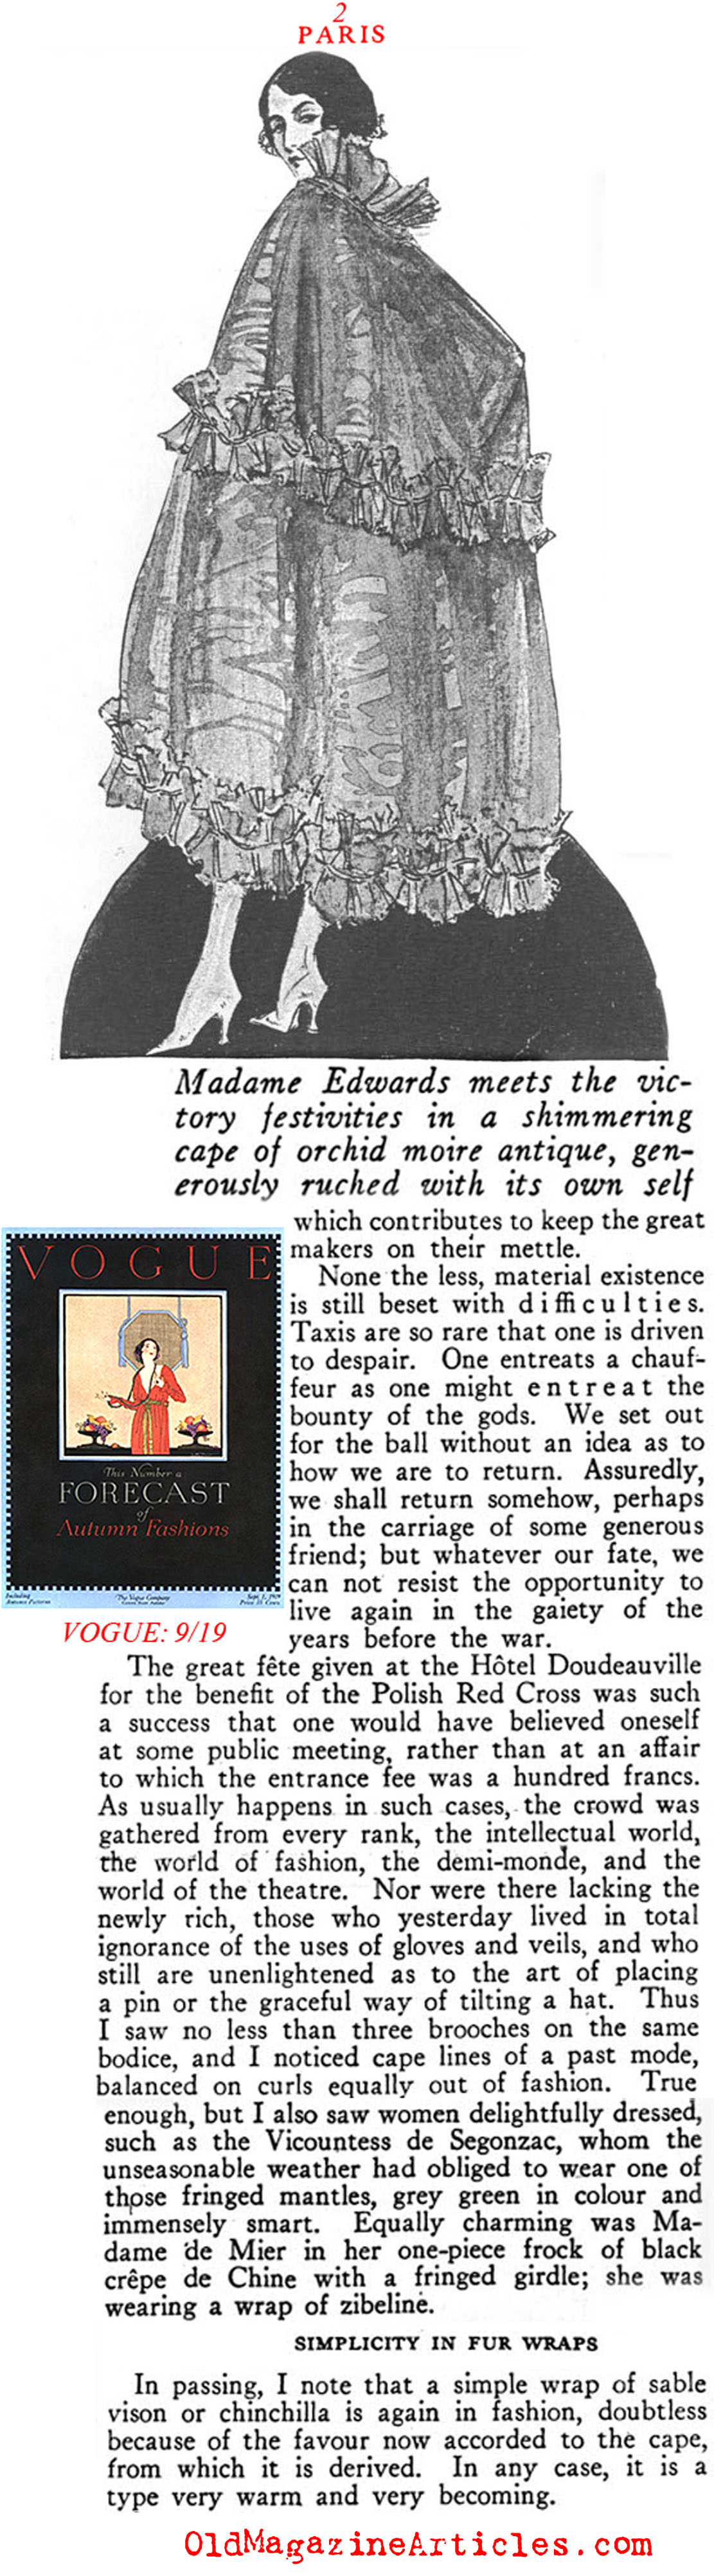 Victory and Paris Fashion (Vogue Magazine, 1919)